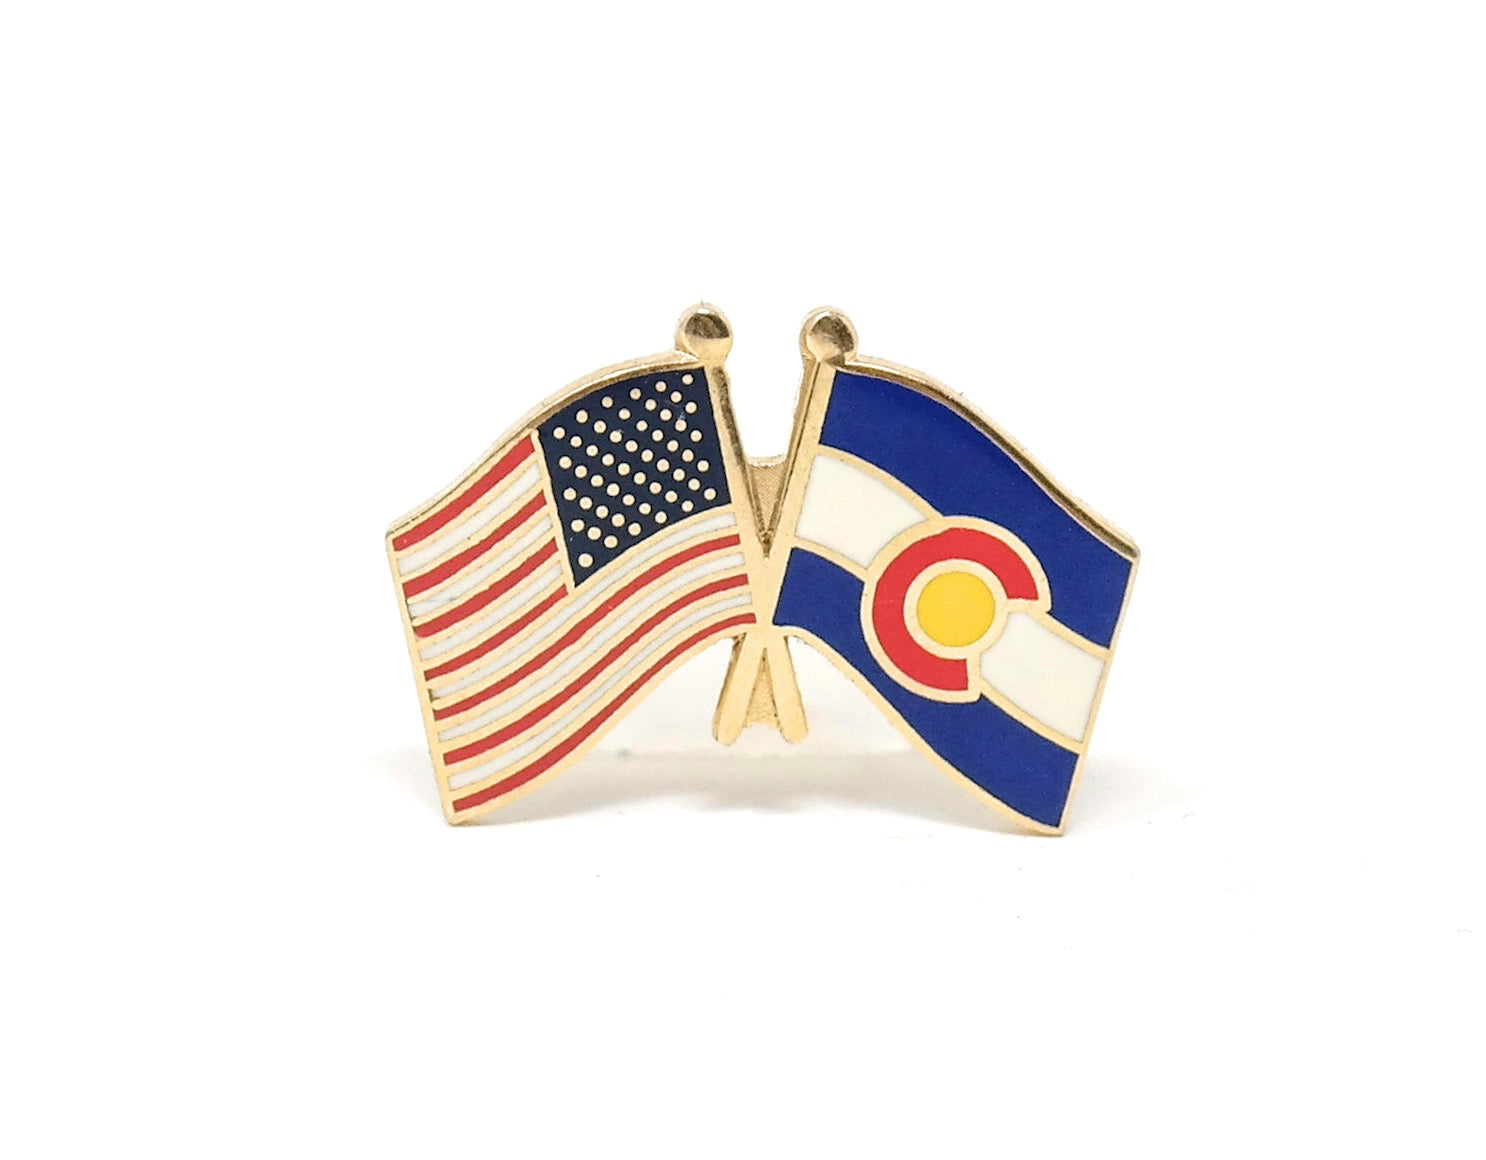 Colorado State & USA Friendship Flags Lapel Pin